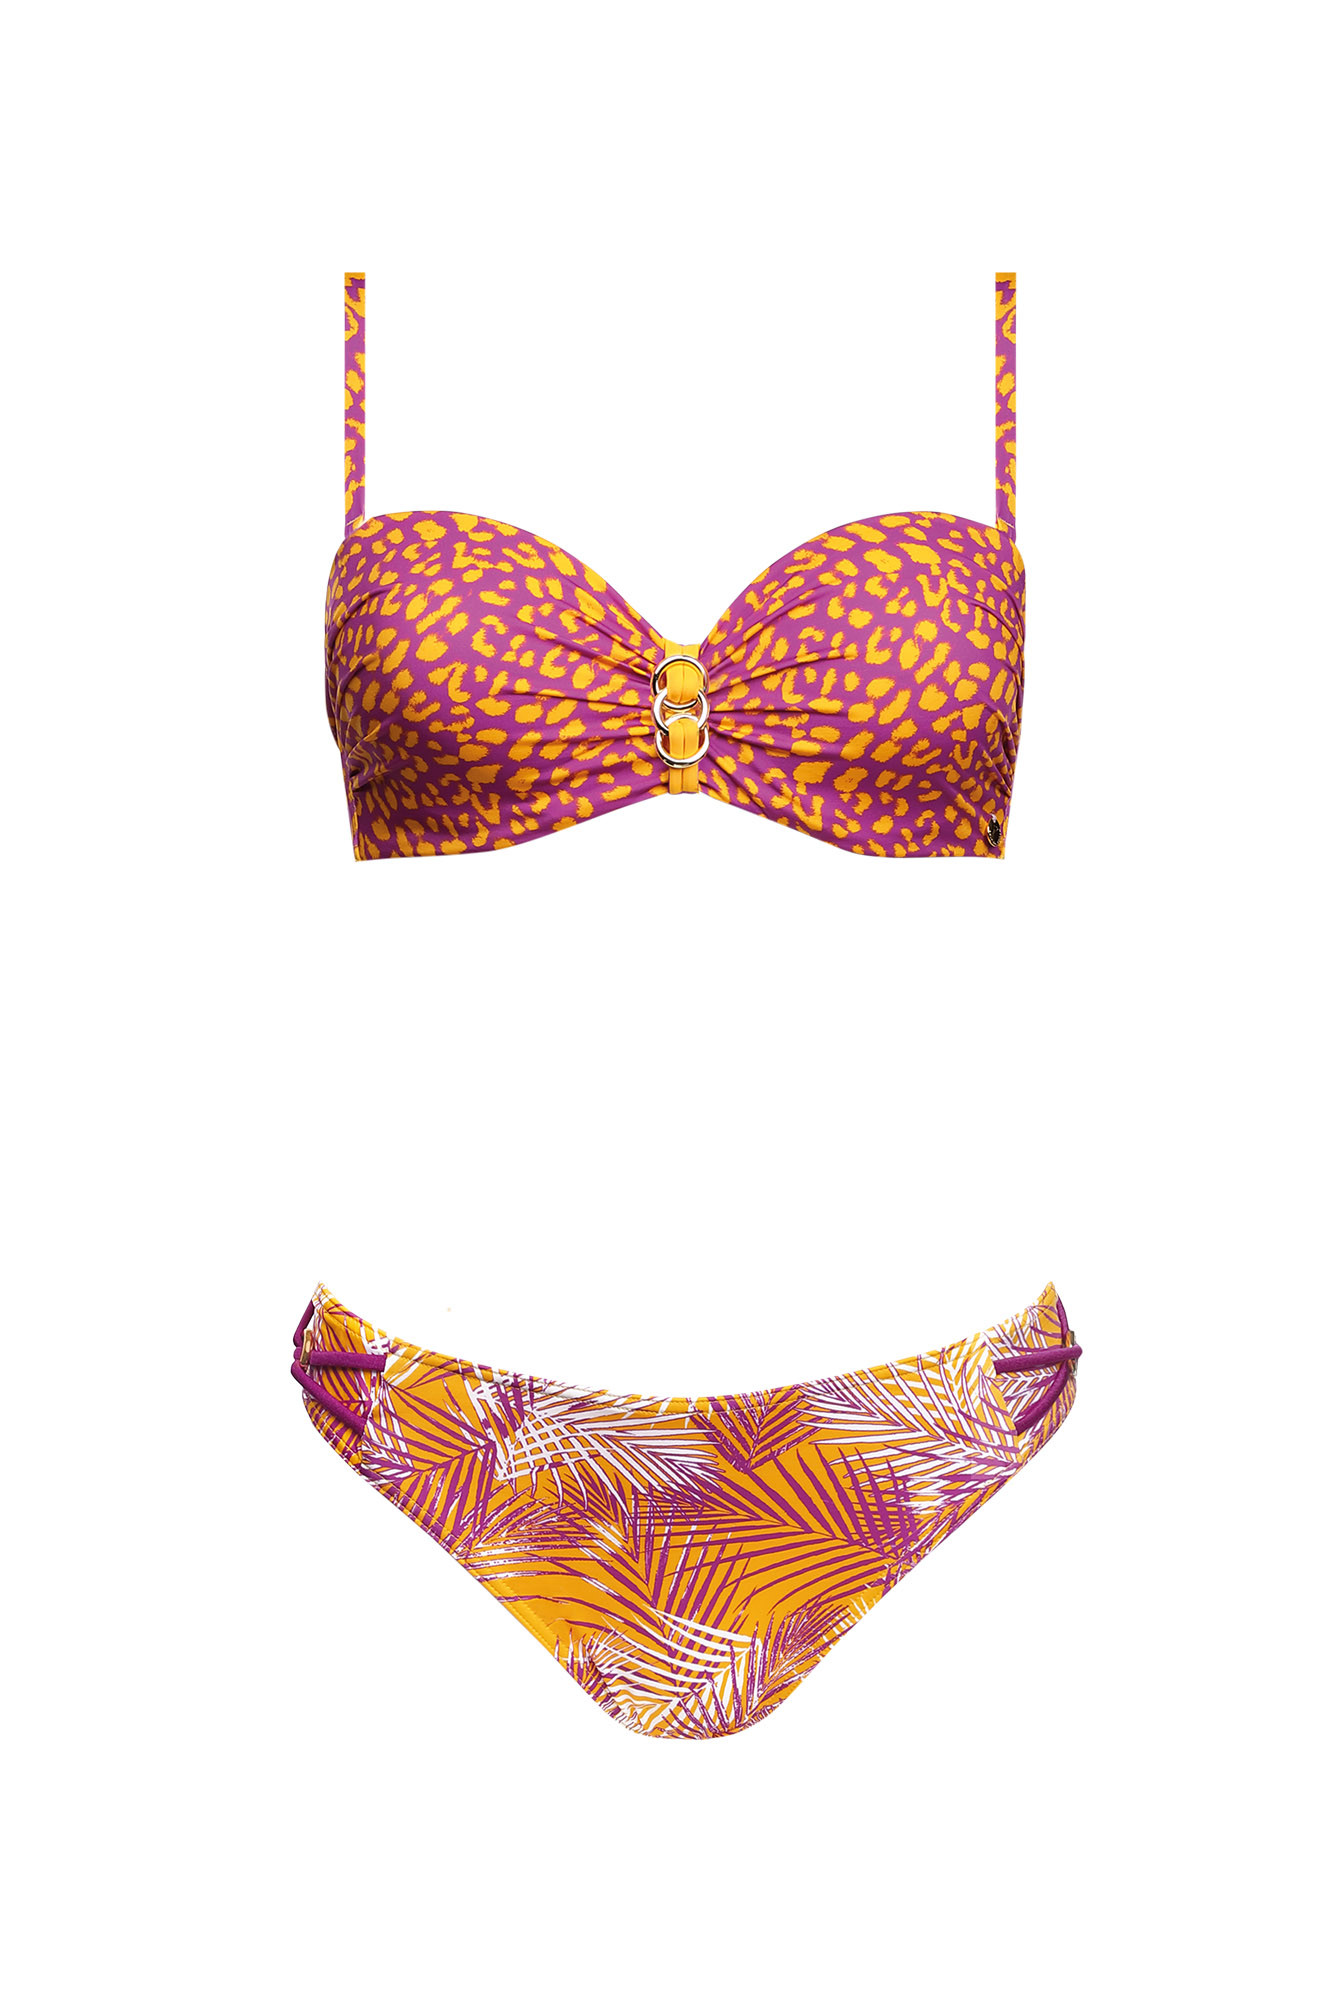 Dvojdílné plavky Paradise2 S7300O22 - Self oranžová-fialová 40C